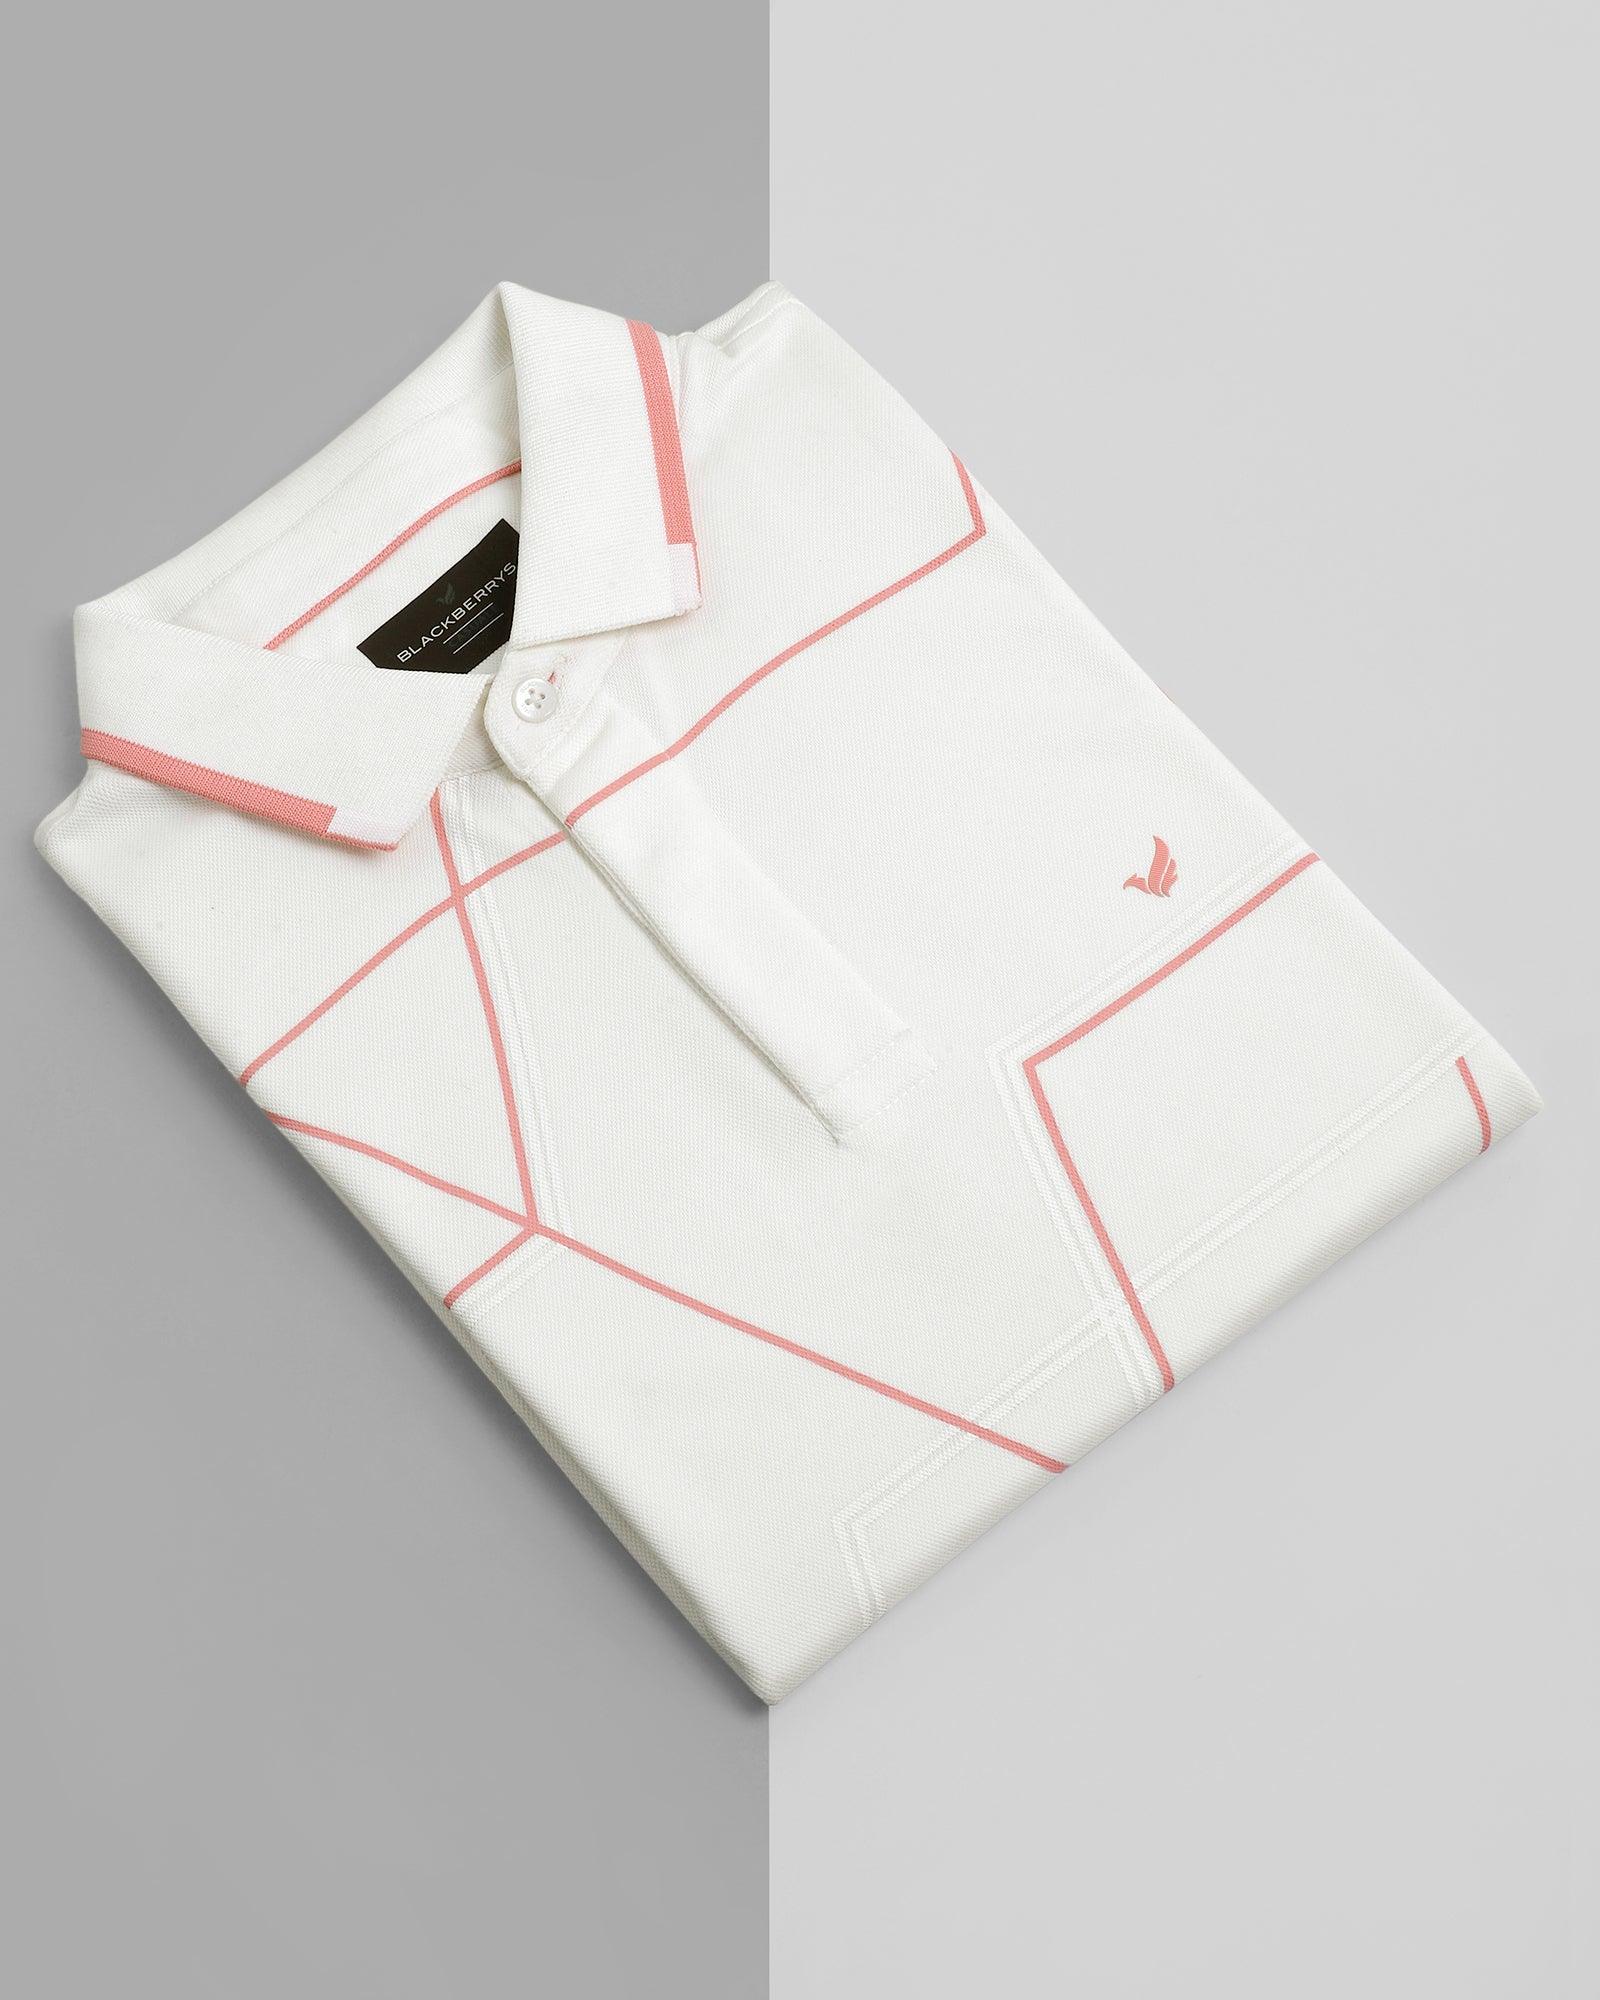 TechPro Polo Ivory White Printed T Shirt - Cross